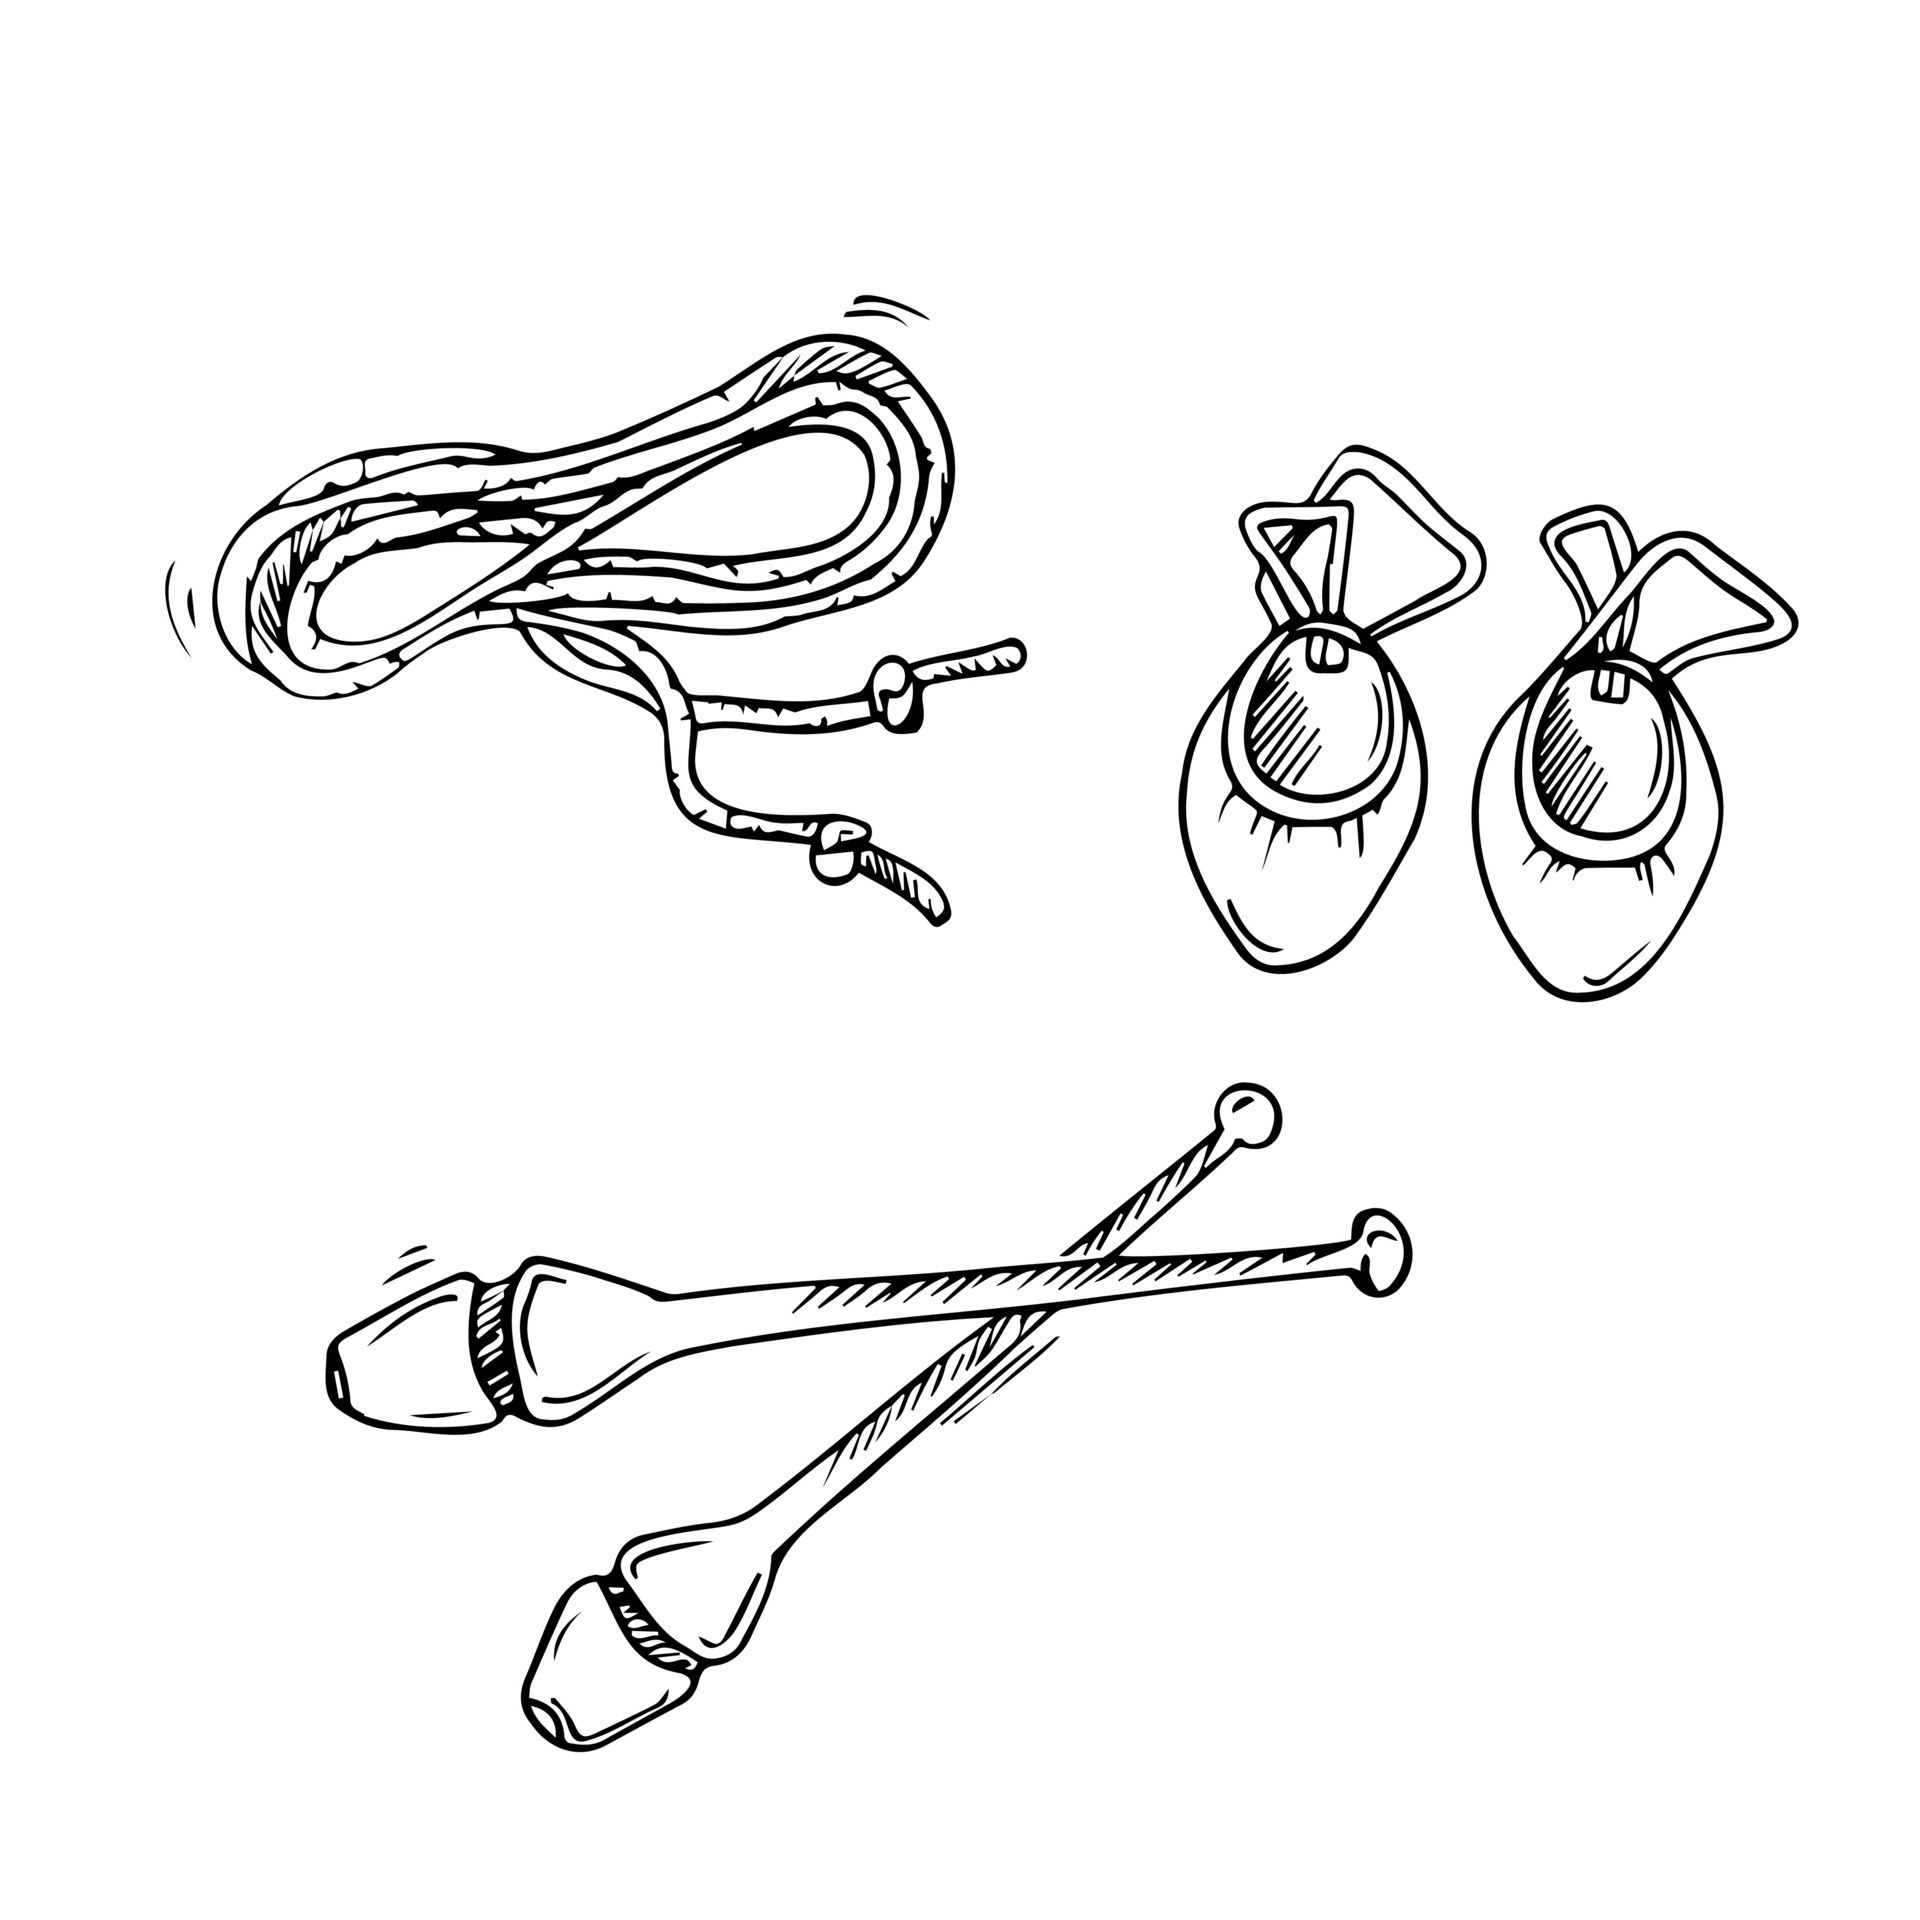 https://static.vecteezy.com/system/resources/previews/032/178/700/original/doodle-rhythmic-gymnastics-equipment-set-line-art-skipping-rope-sportwear-clubs-halfshoes-illustrations-vector.jpg